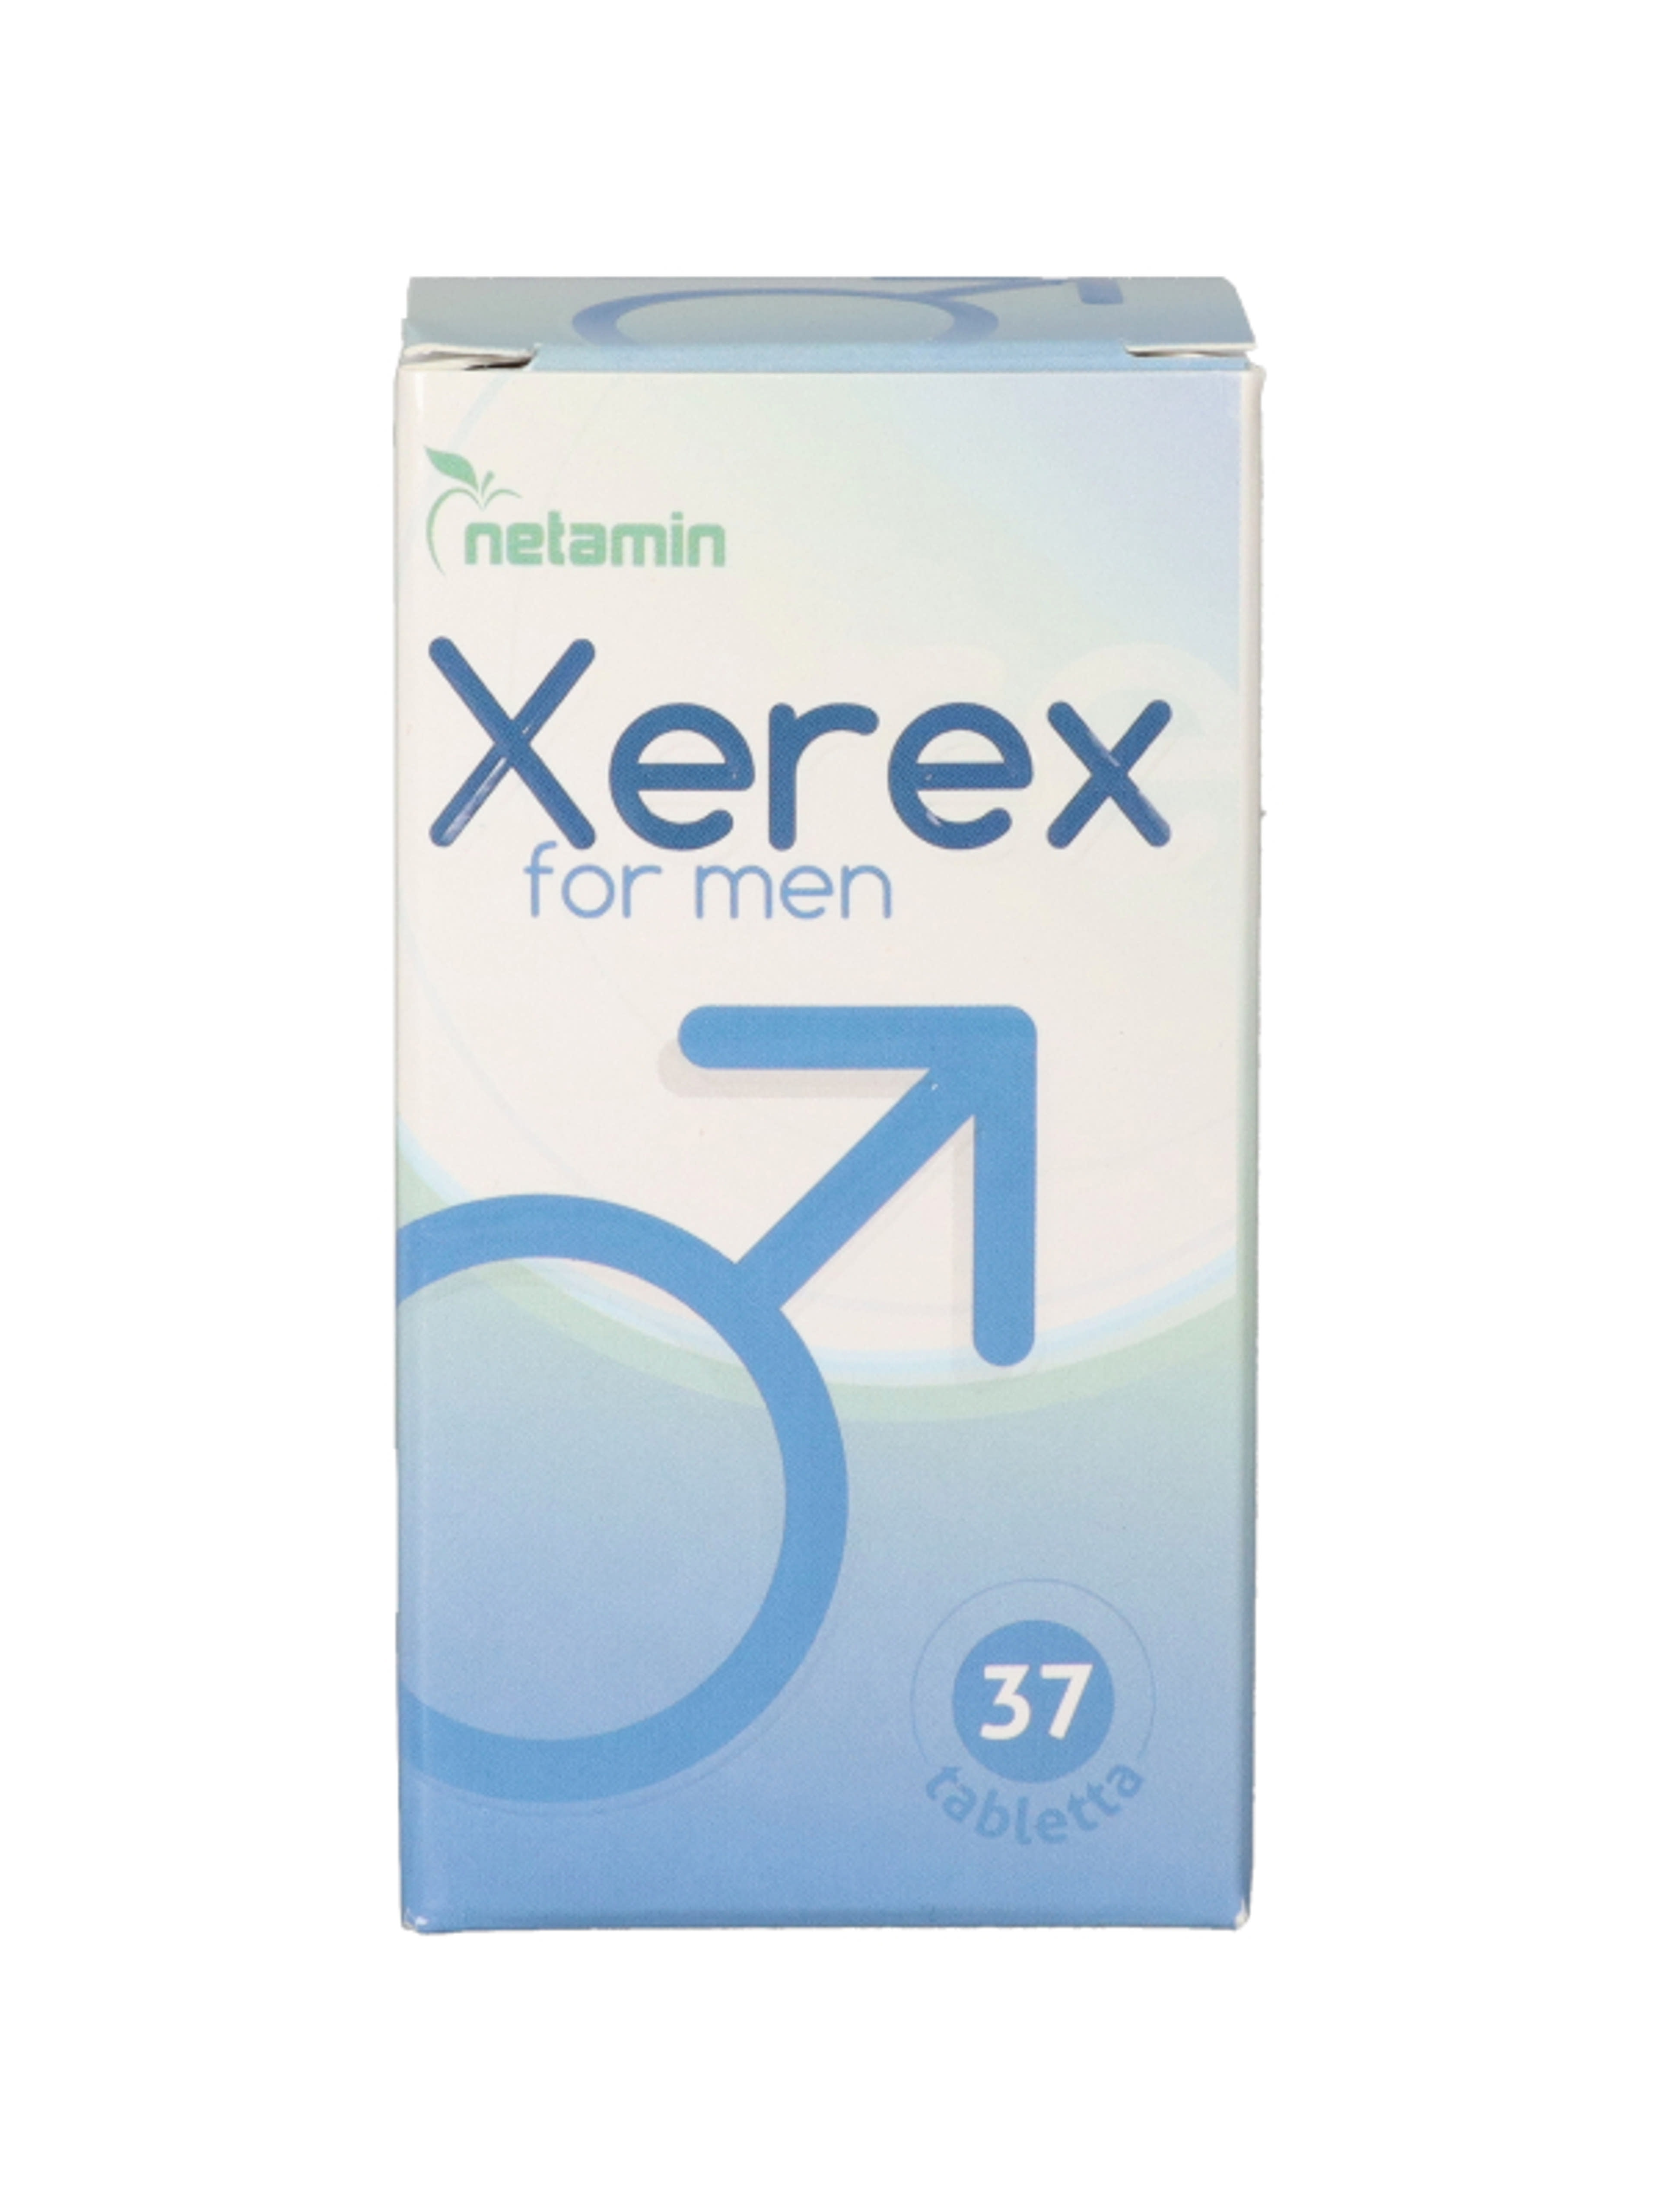 Netamin Xerex For Men potenciatabletta férfiaknak - 37 db